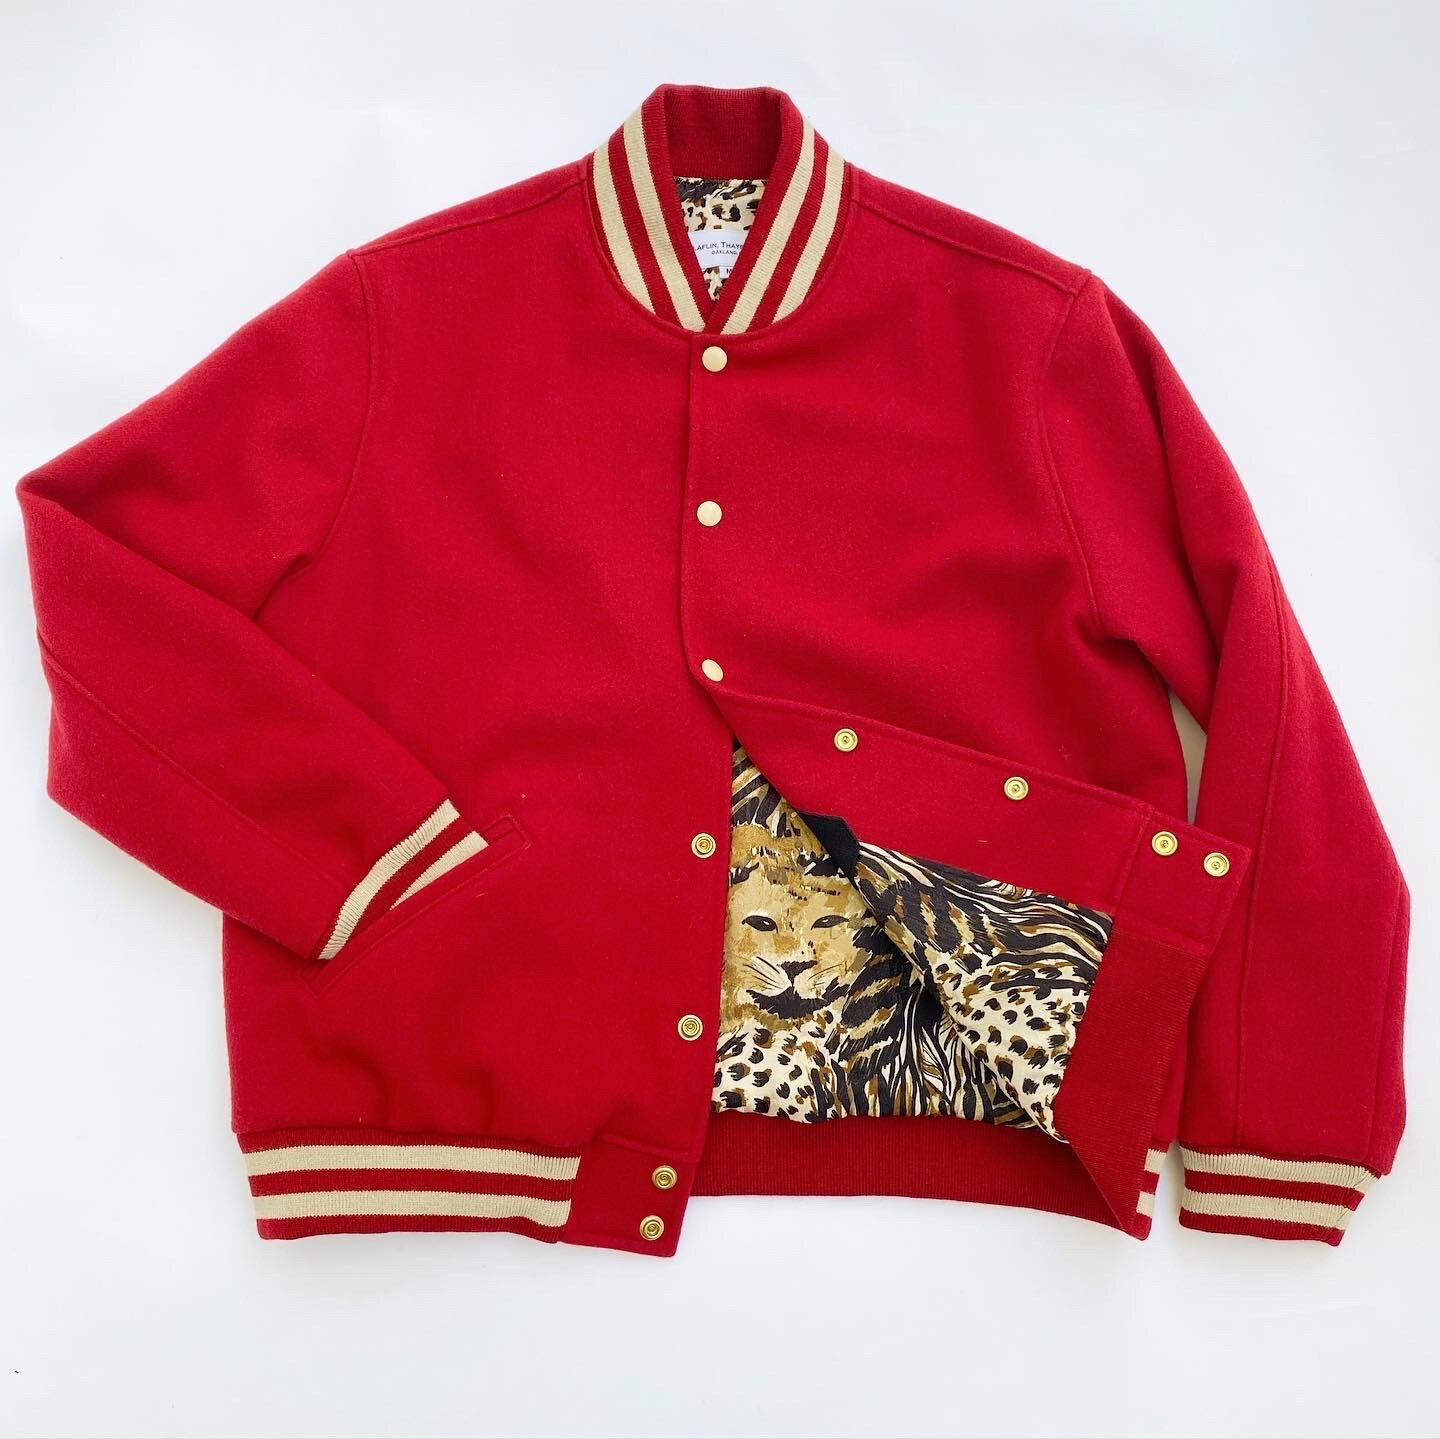  Red wool, cream stripe details, animal print lining 